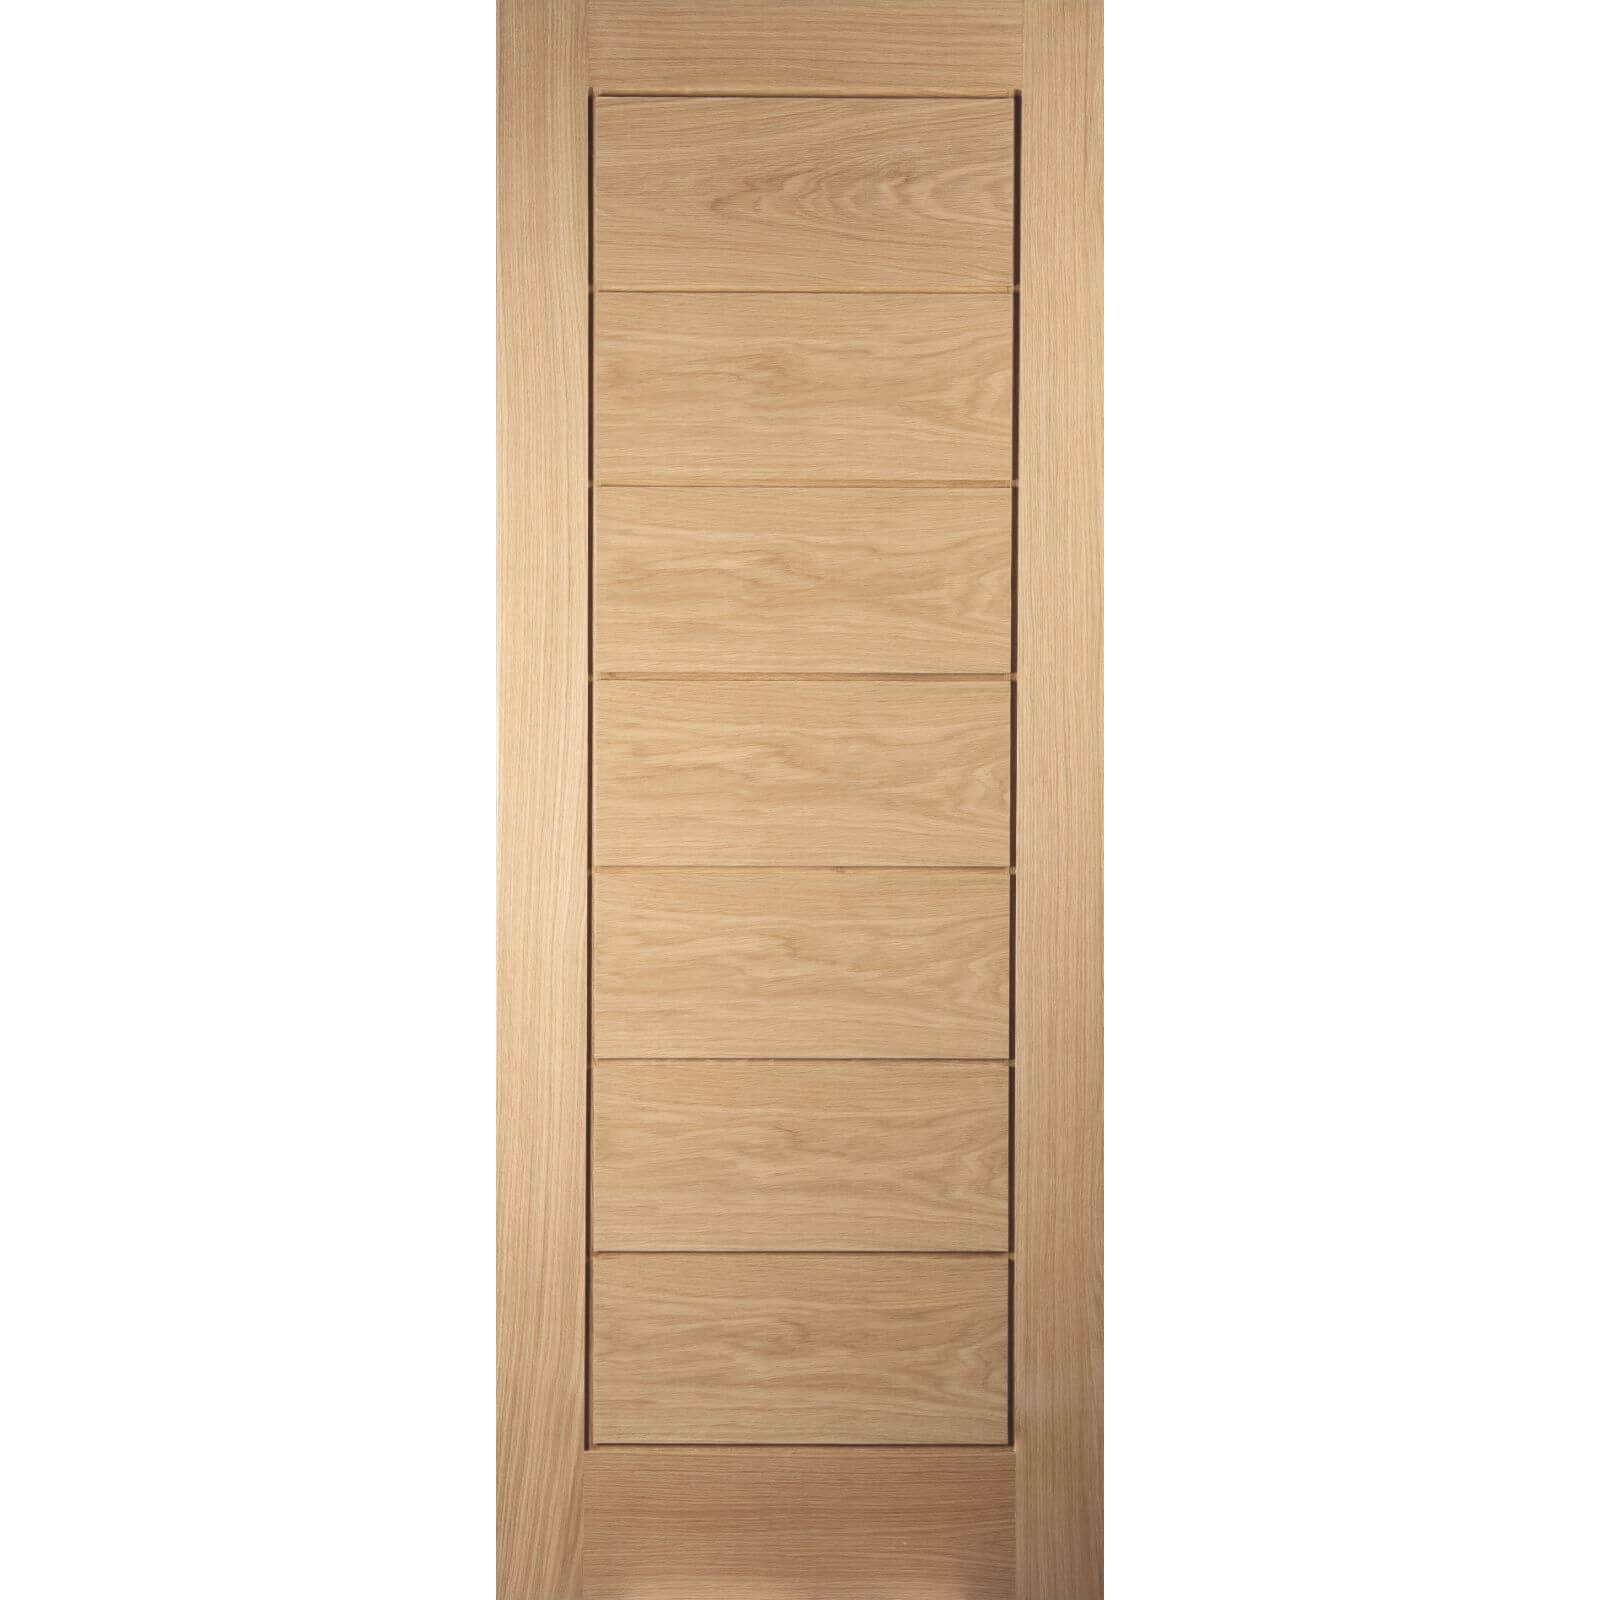 Photo of Horizontal 7 Panel White Oak Veneer Internal Door - 826mm Wide